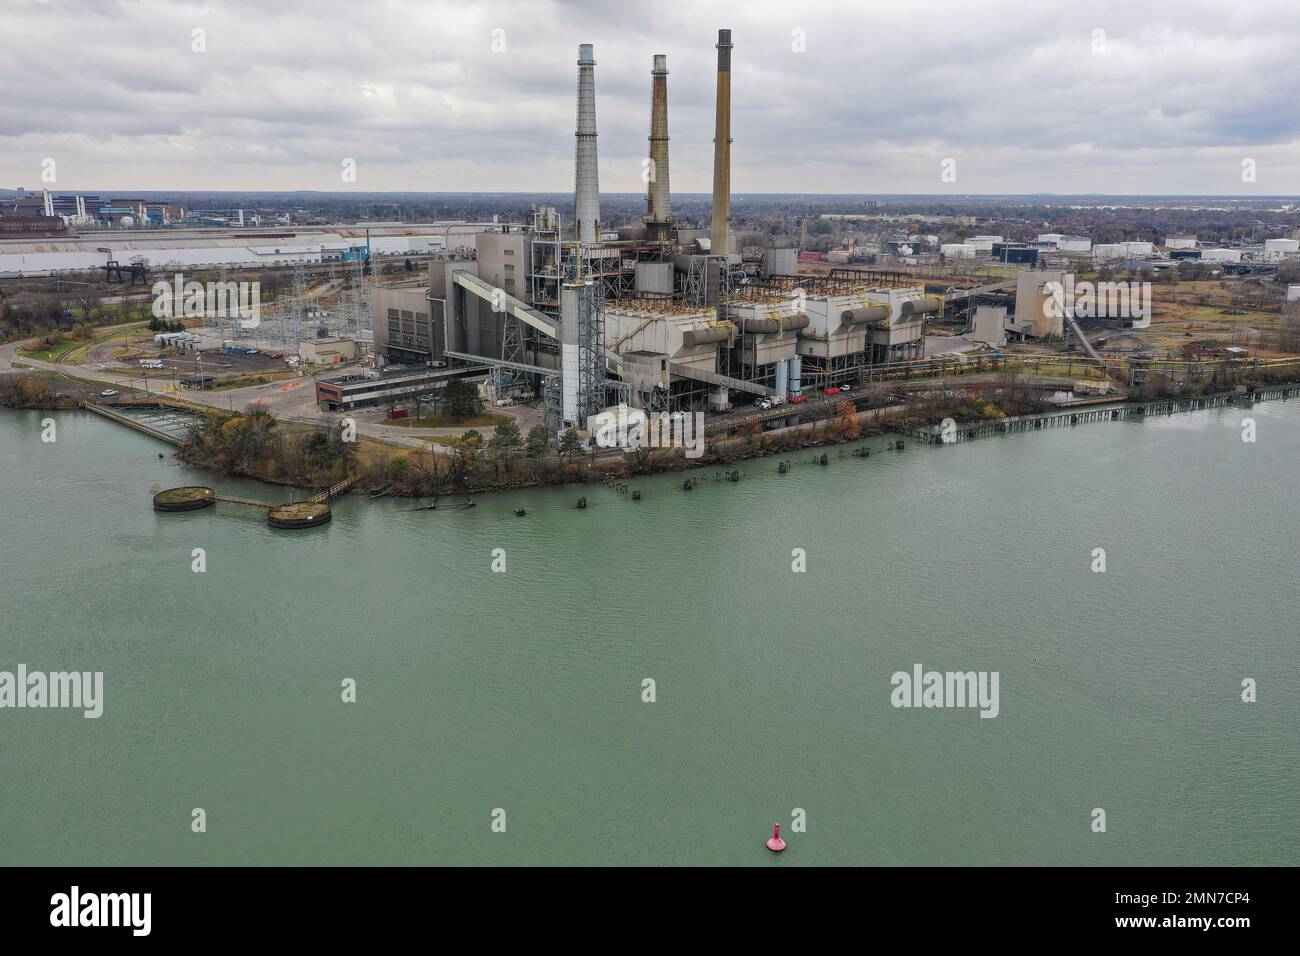 Kohlekraftwerk DTE in River Rouge am Ufer des Detroit River, Michigan, USA - im Mai 2021 in Ruhestand Stockfoto